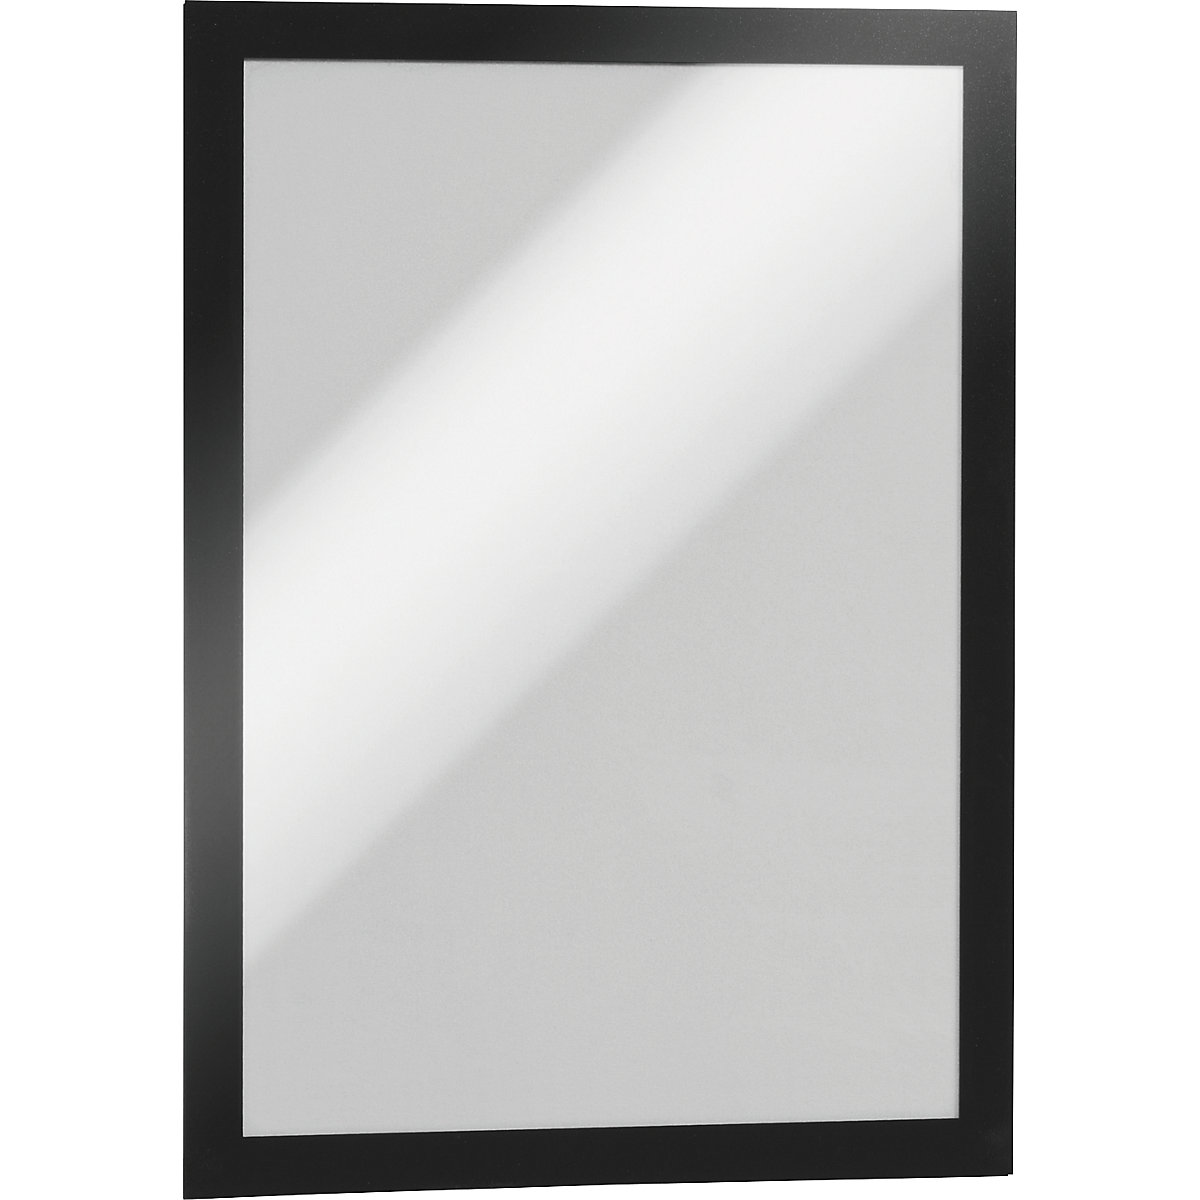 DURAFRAME® display frame - DURABLE